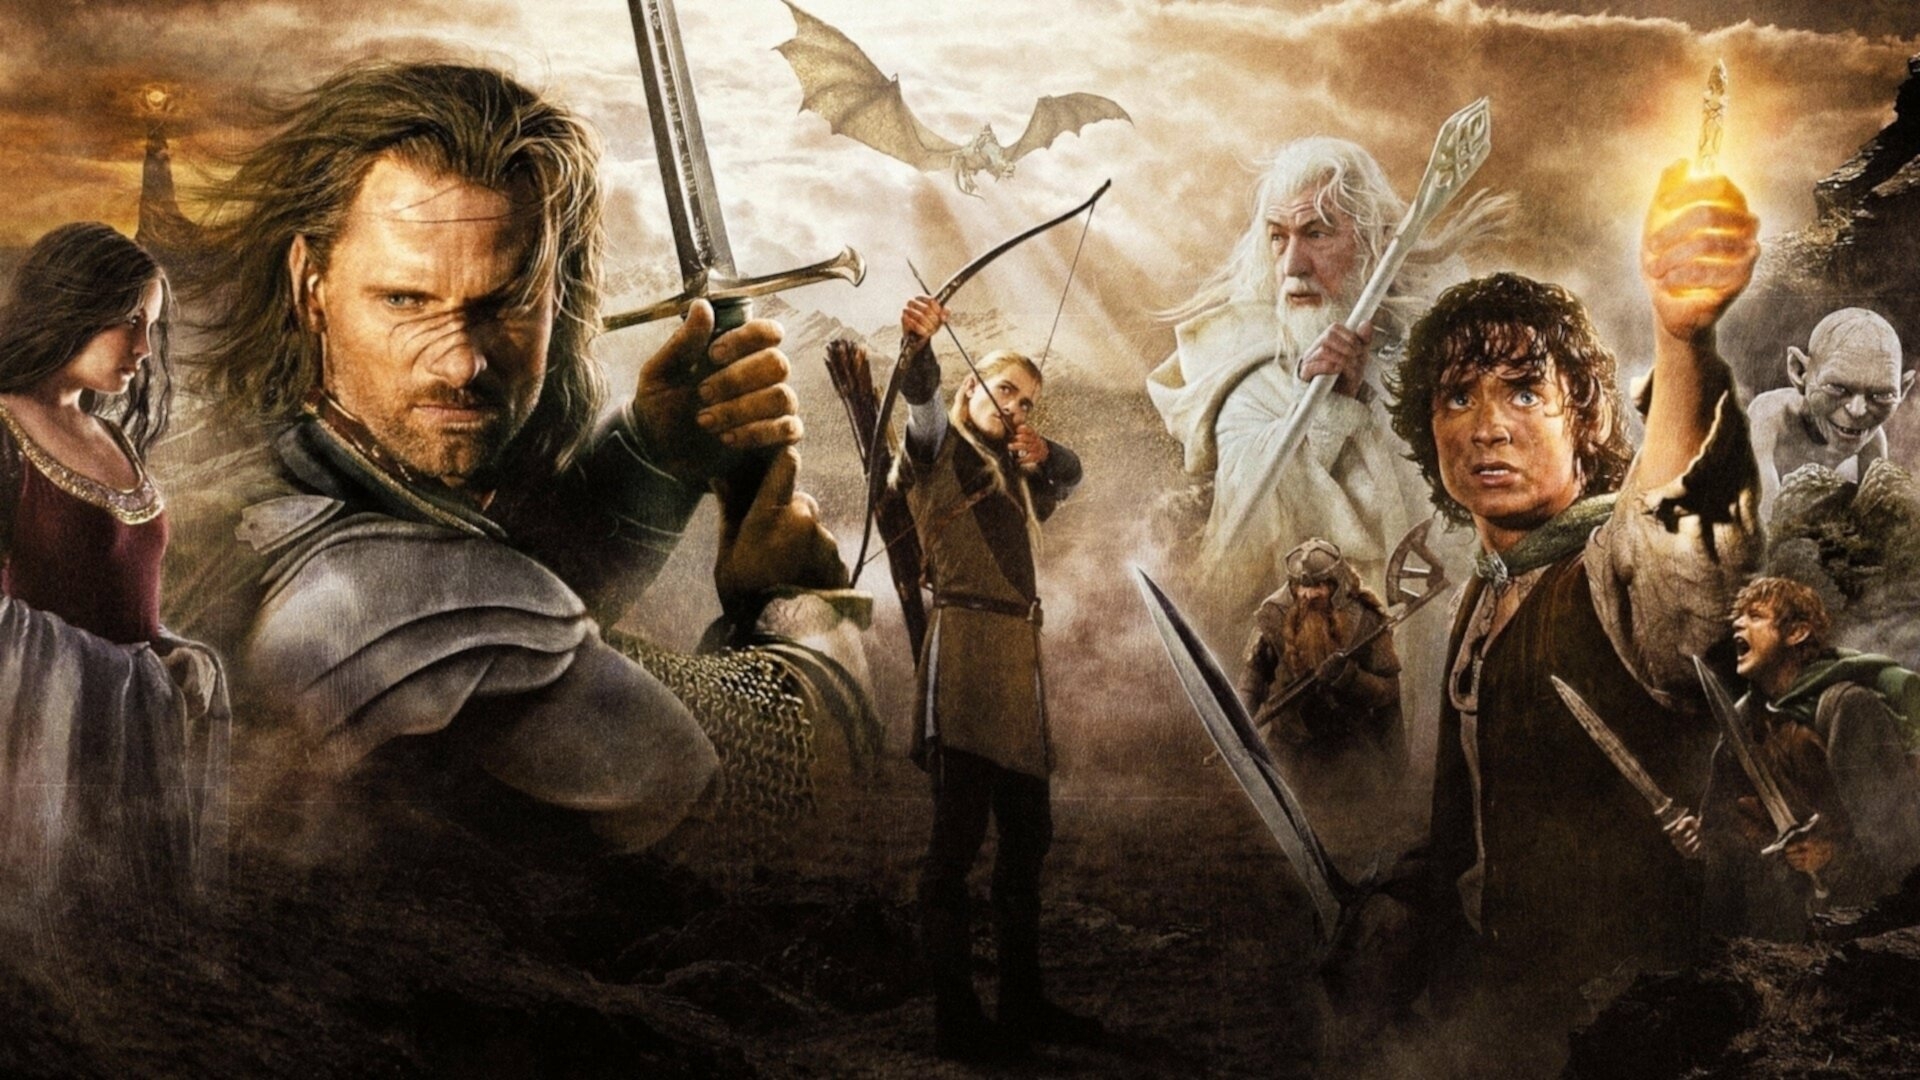 Володар перснів: Повернення короля (The Lord of the Rings: The Return of the King)